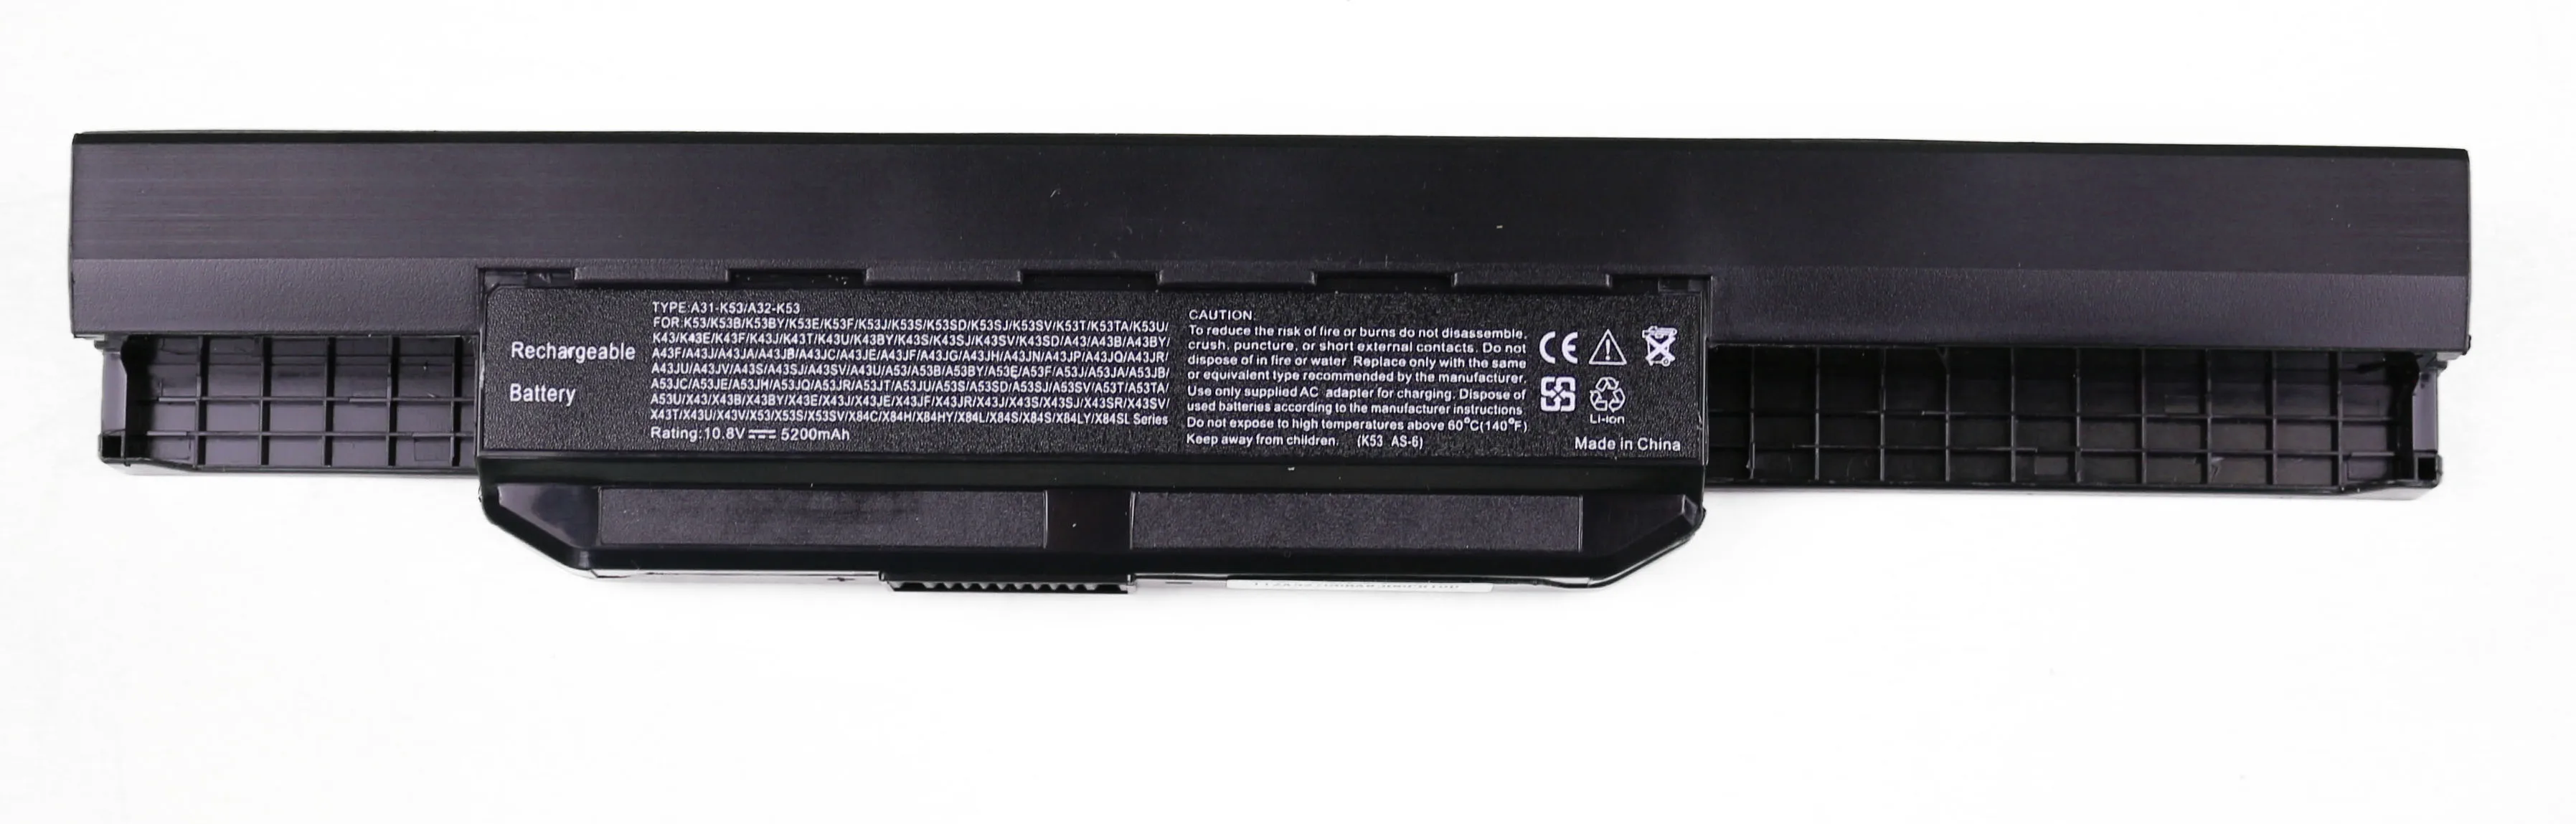 Аккумулятор для ноутбука Asus A41-K53 (батарея) | Компьютеры и